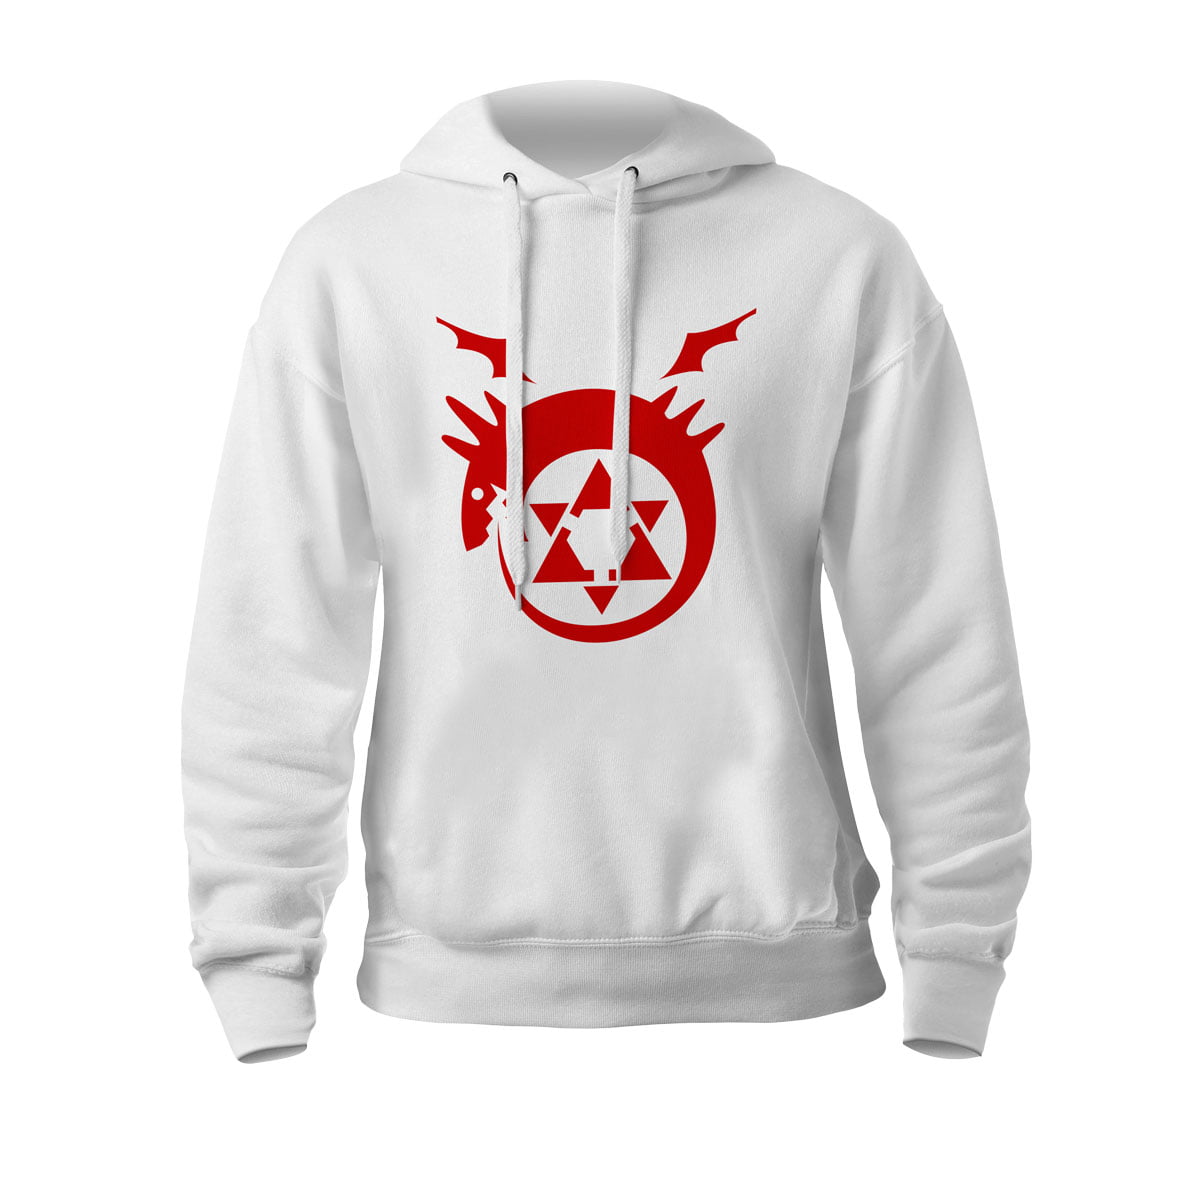 Fma logo kapsonlu b - fullmetal alchemist unisex kapşonlu sweatshirt - figurex